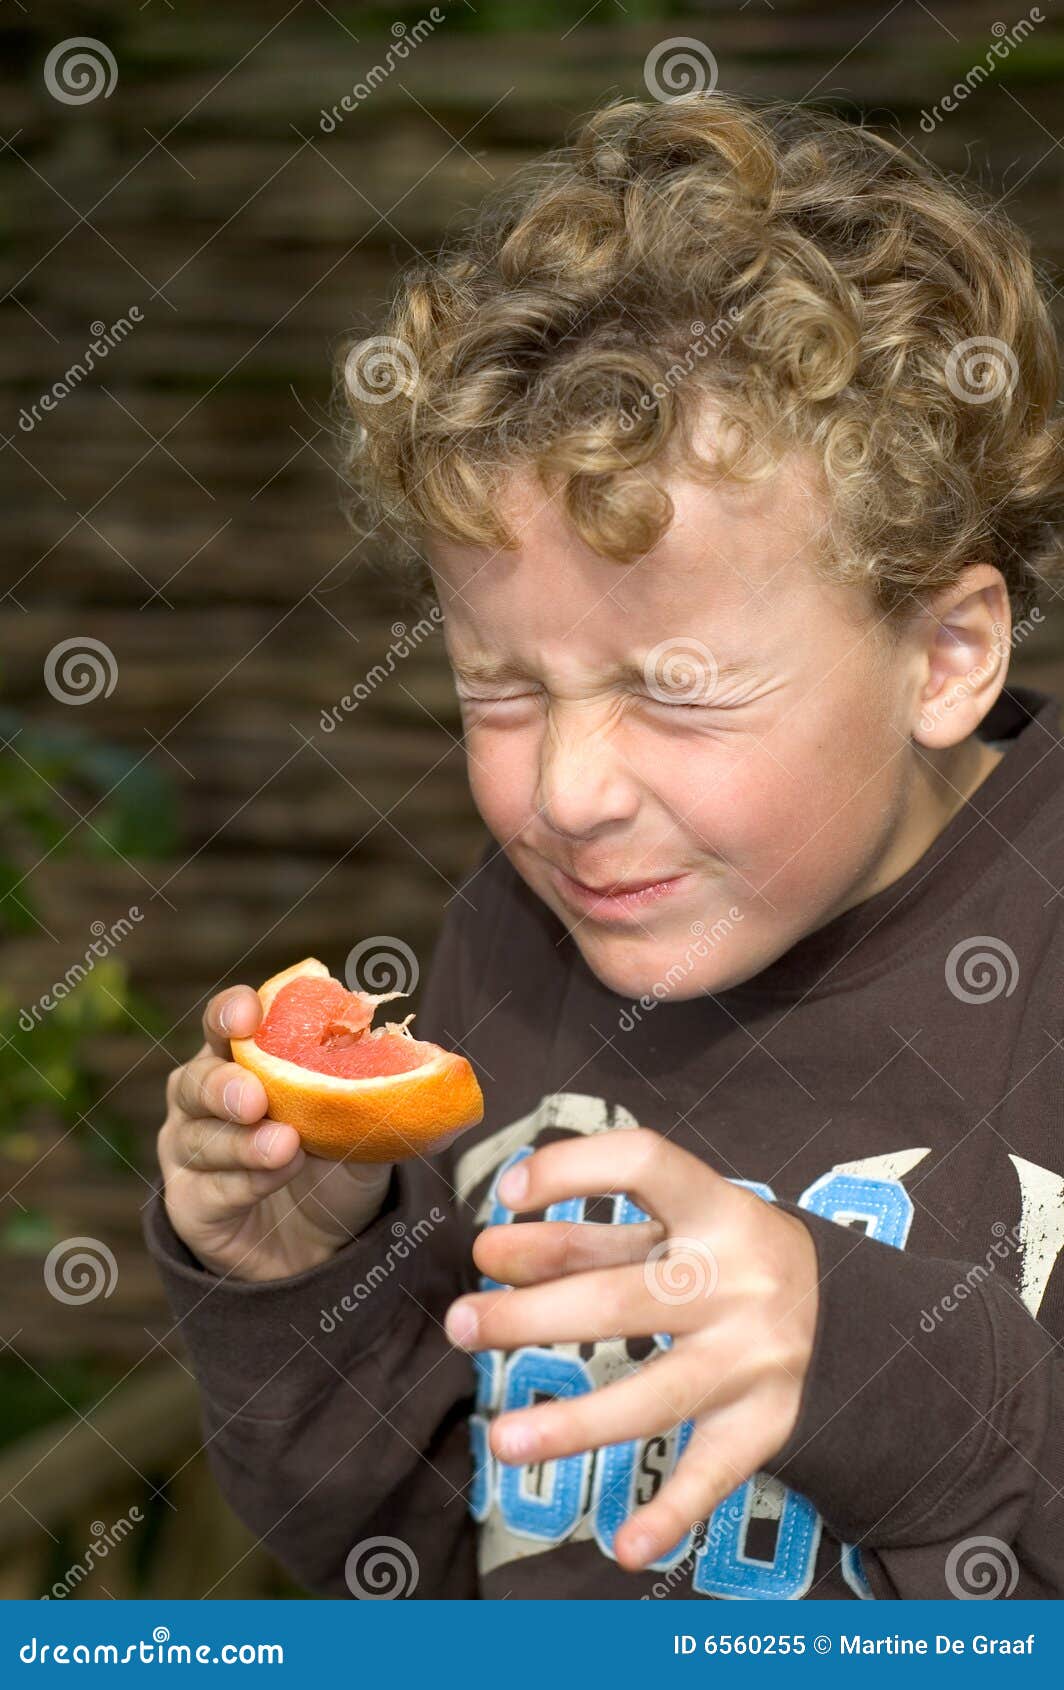 boy eating sour grapefruit